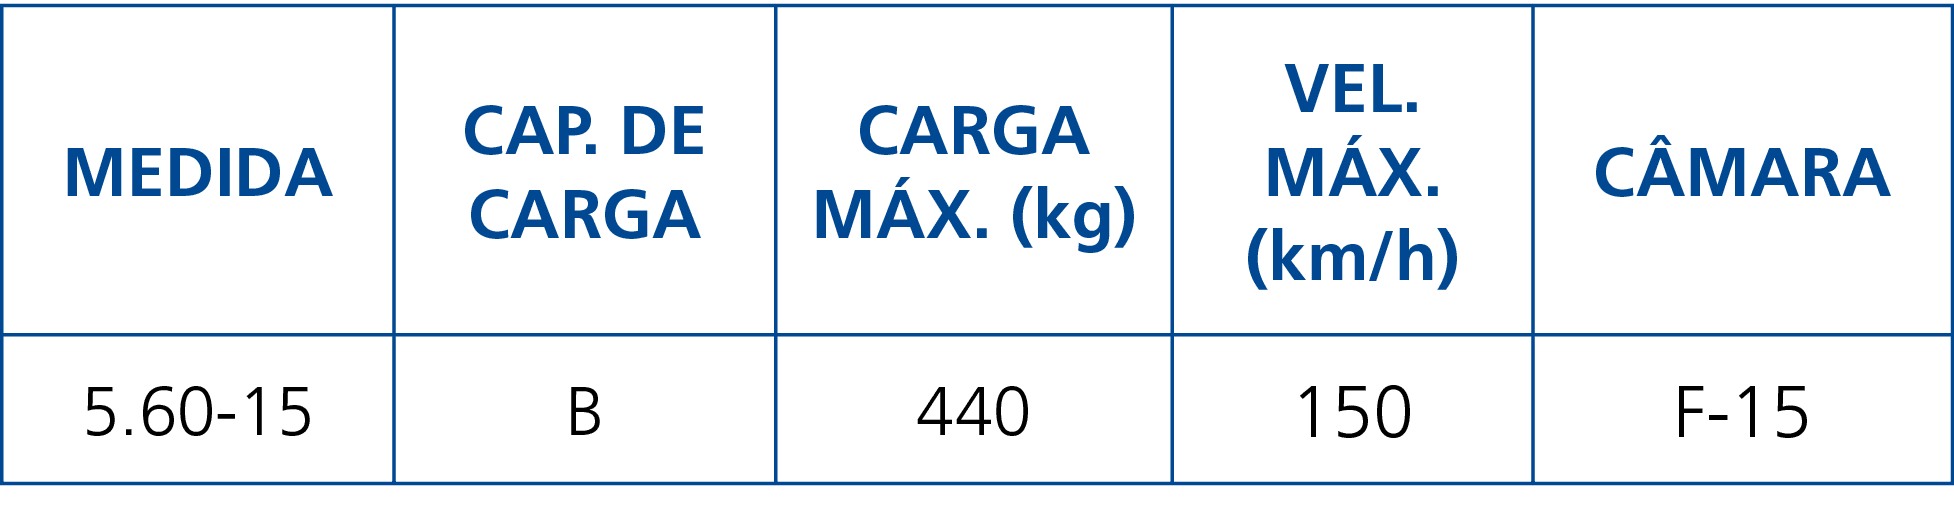 Medida,Cap  de Carga,Carga Máx  (kg),Vel  Máx  (km h),Câmara,5 60-15,B,440,150,F-15